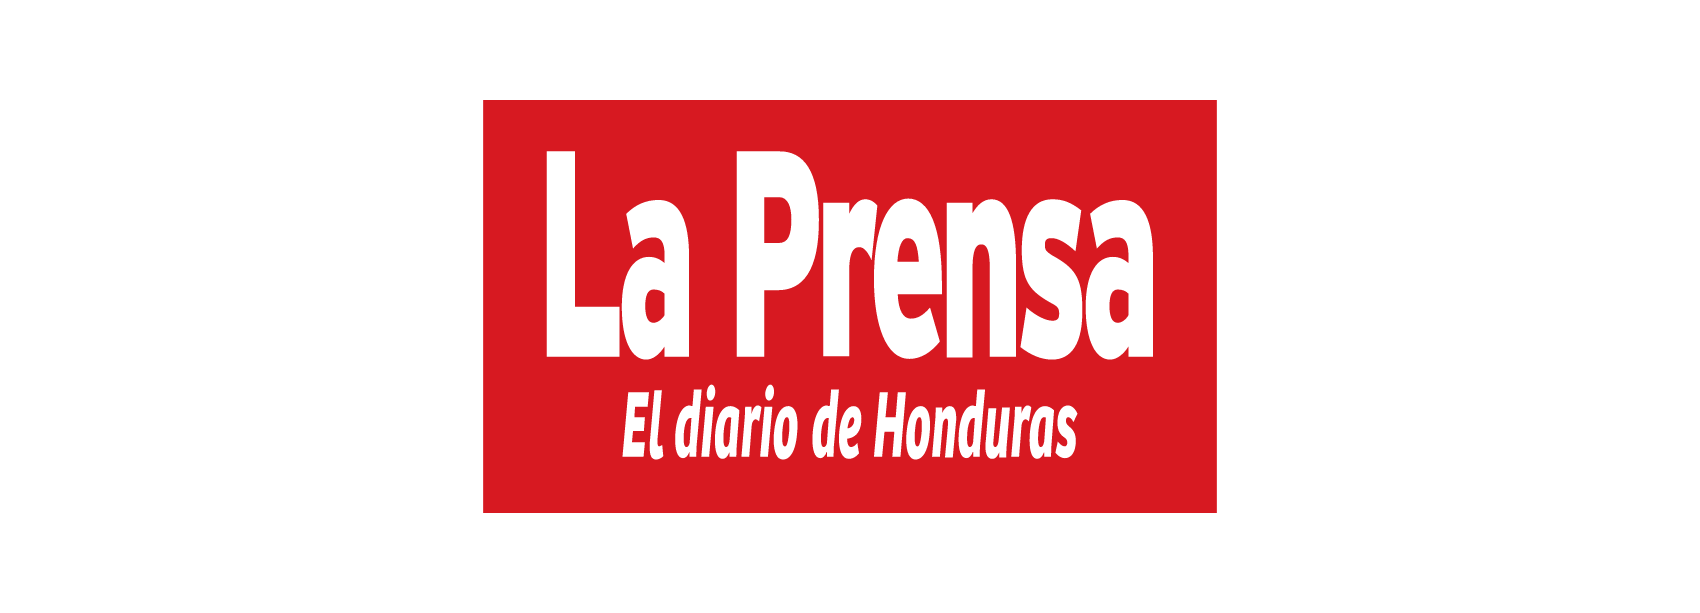 Download La Prensa Logo PNG and Vector (PDF, SVG, Ai, EPS) Free